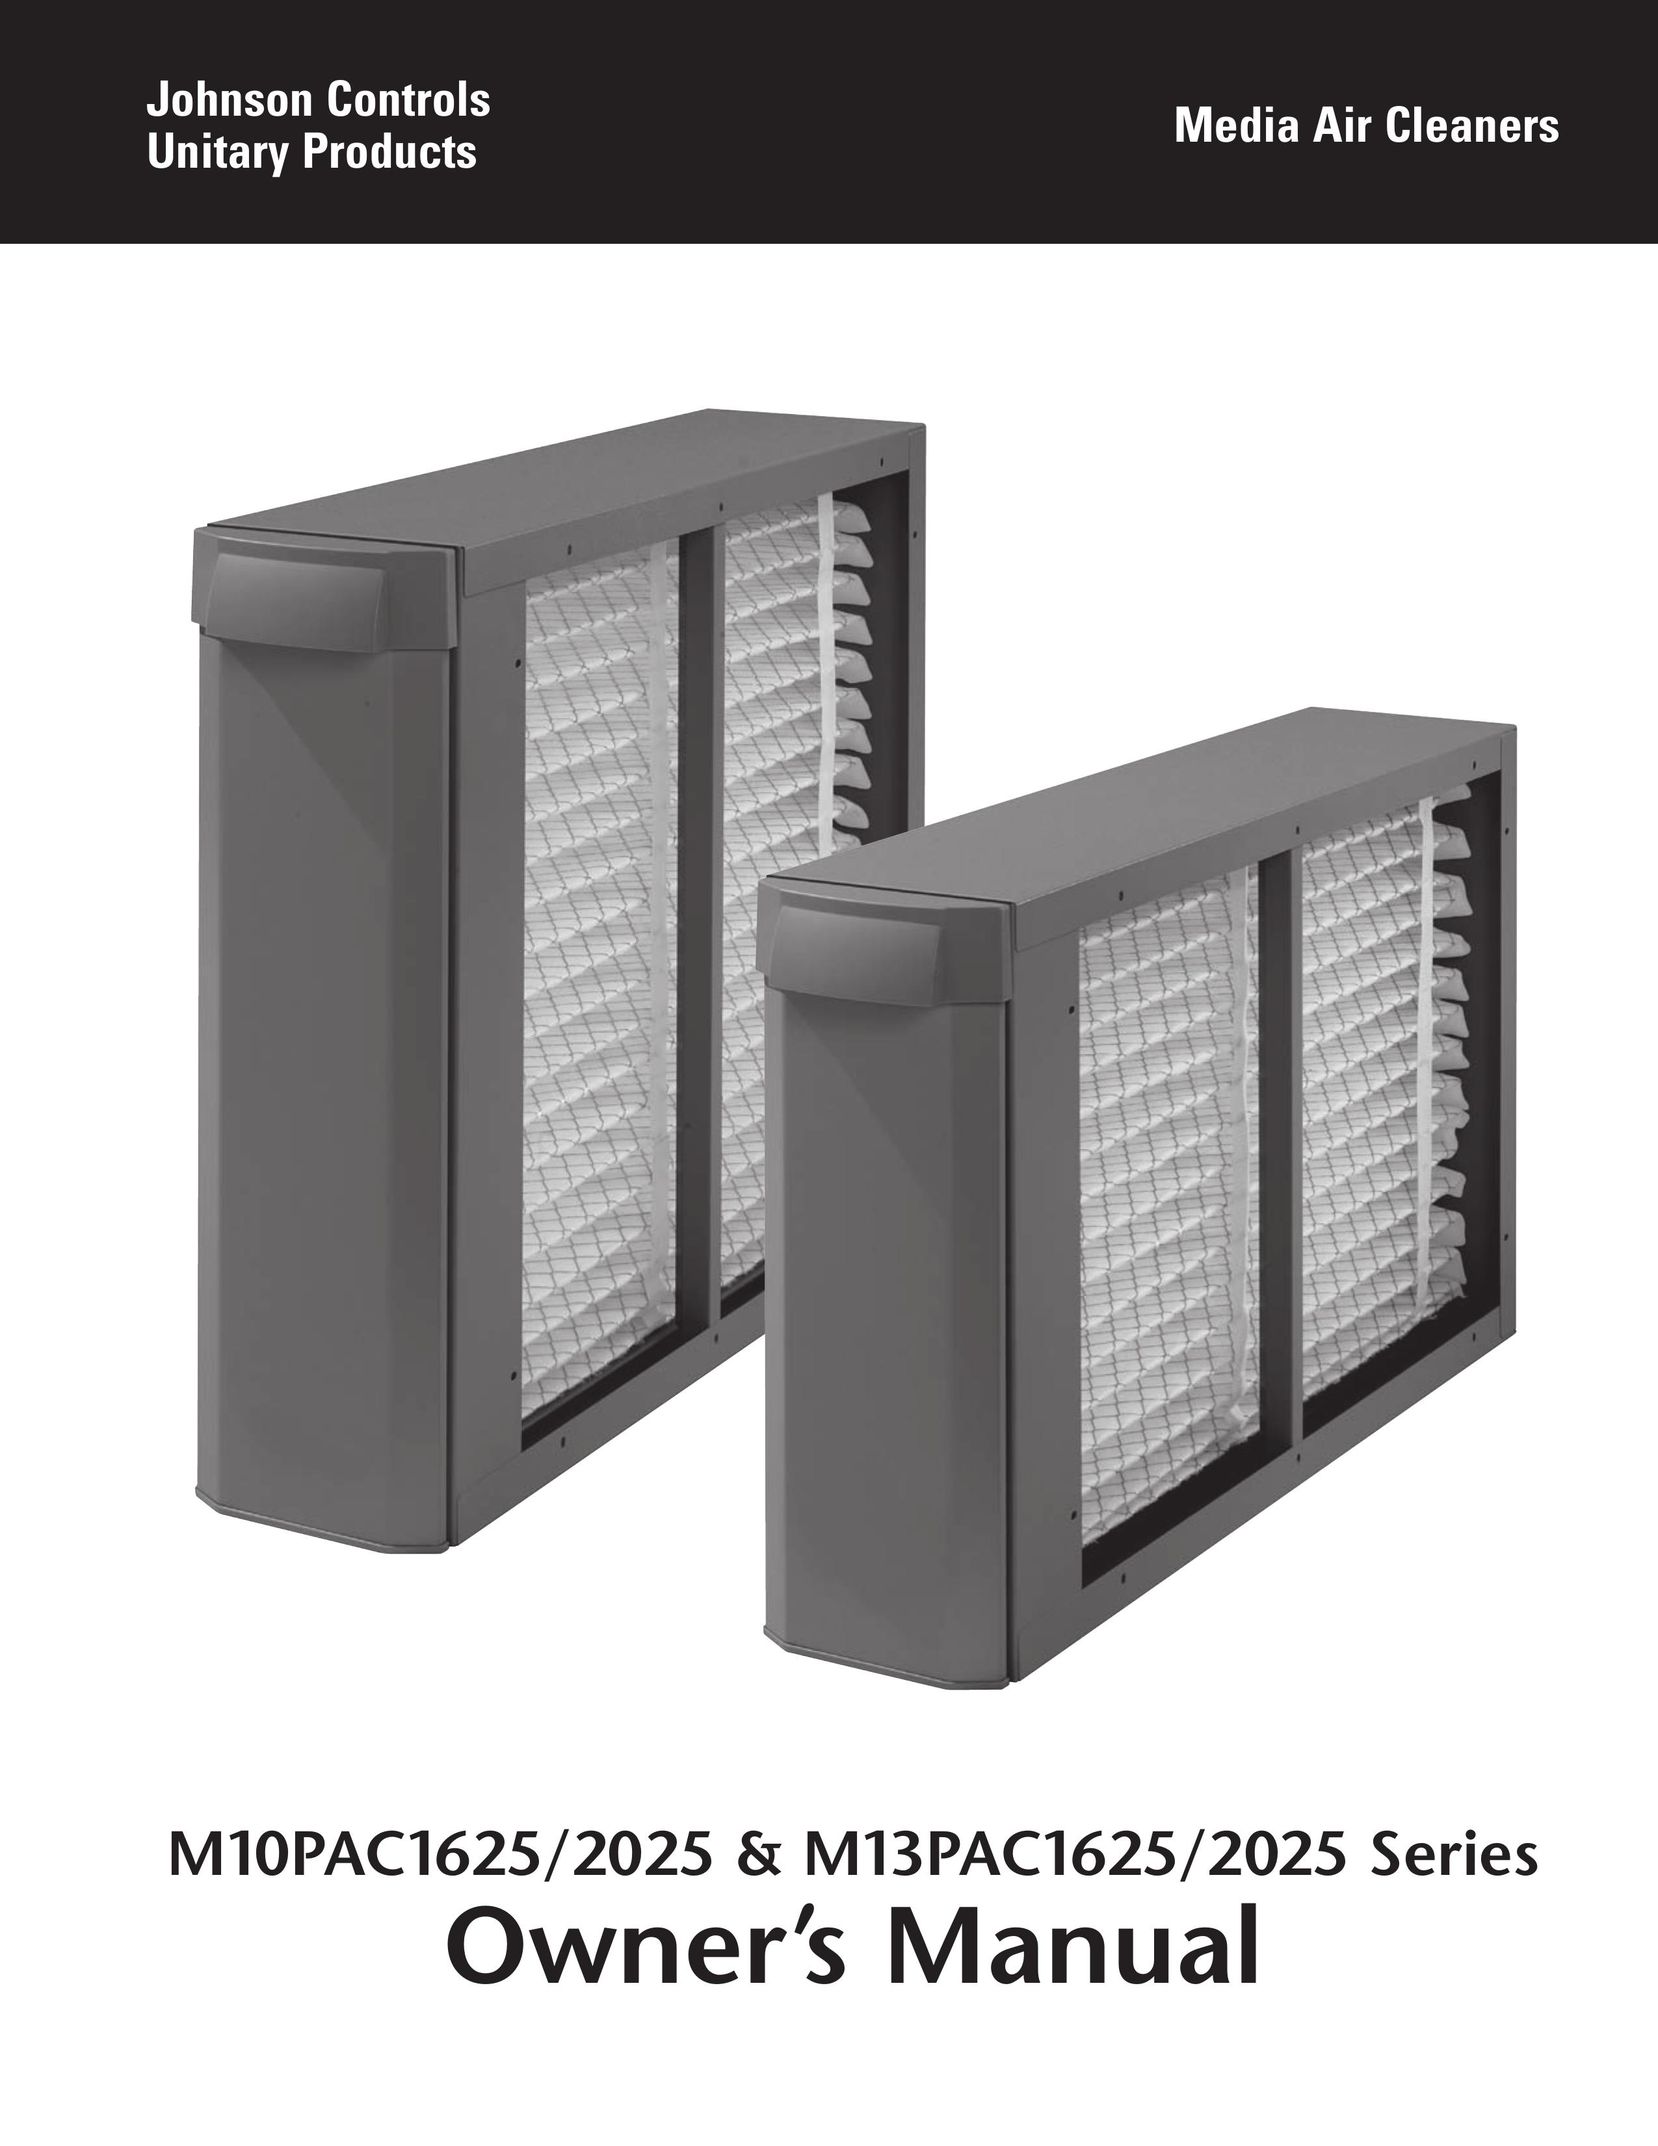 Johnson Controls M13PAC1625/2025 Air Cleaner User Manual